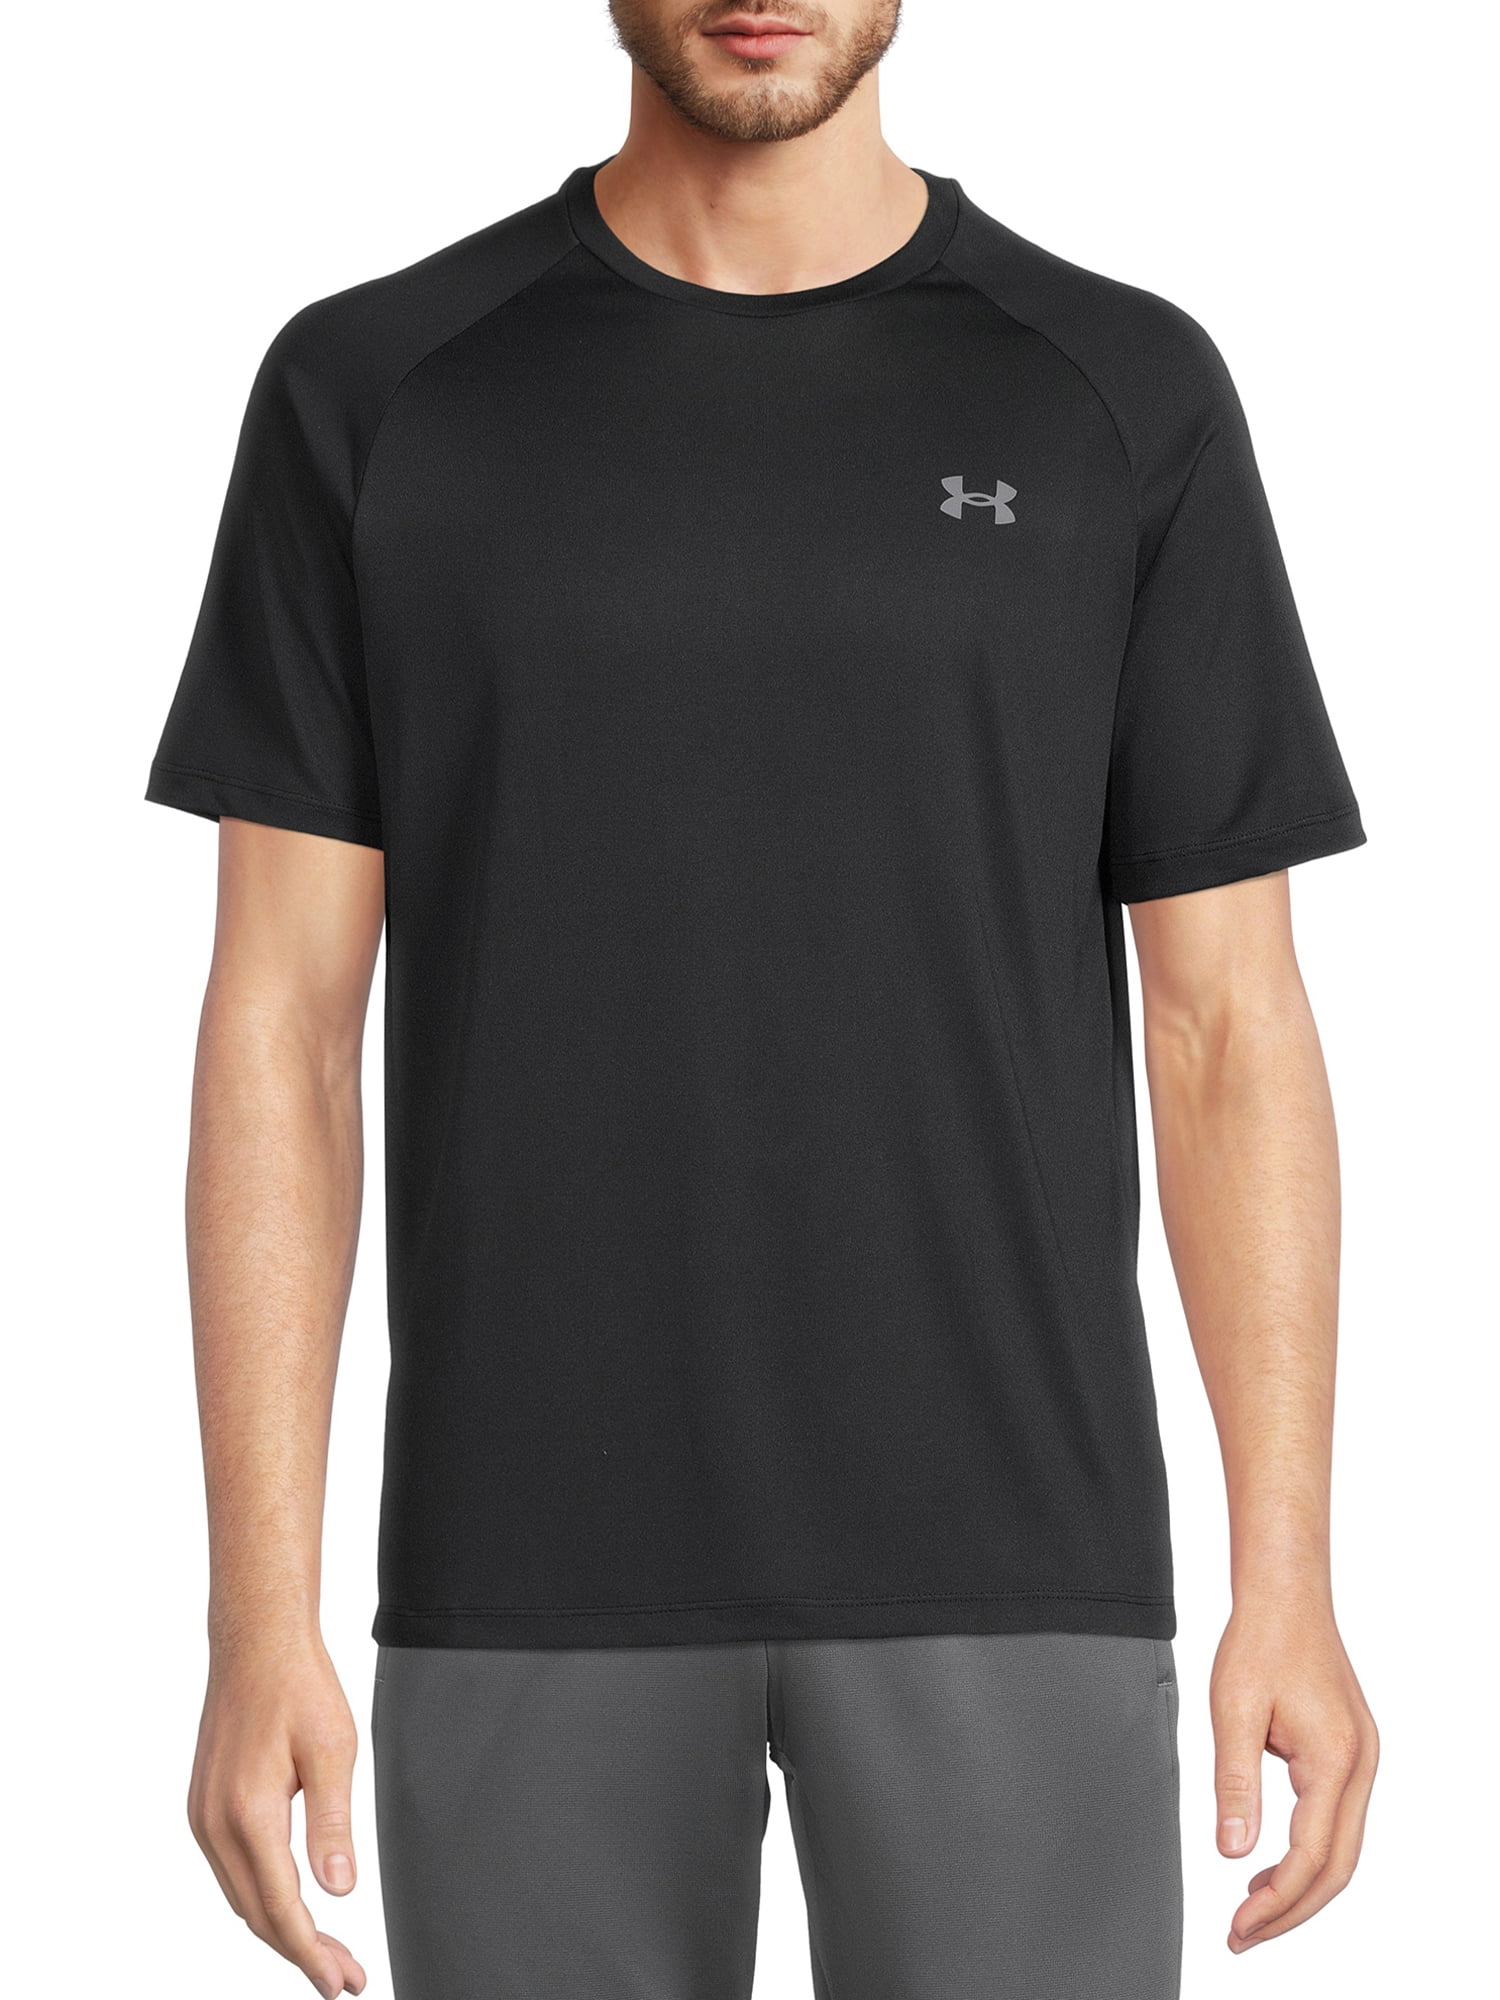 Under Armour Men's and Big Men's UA Tech 2.0 Short Sleeve T-Shirt, Sizes S-2XL -